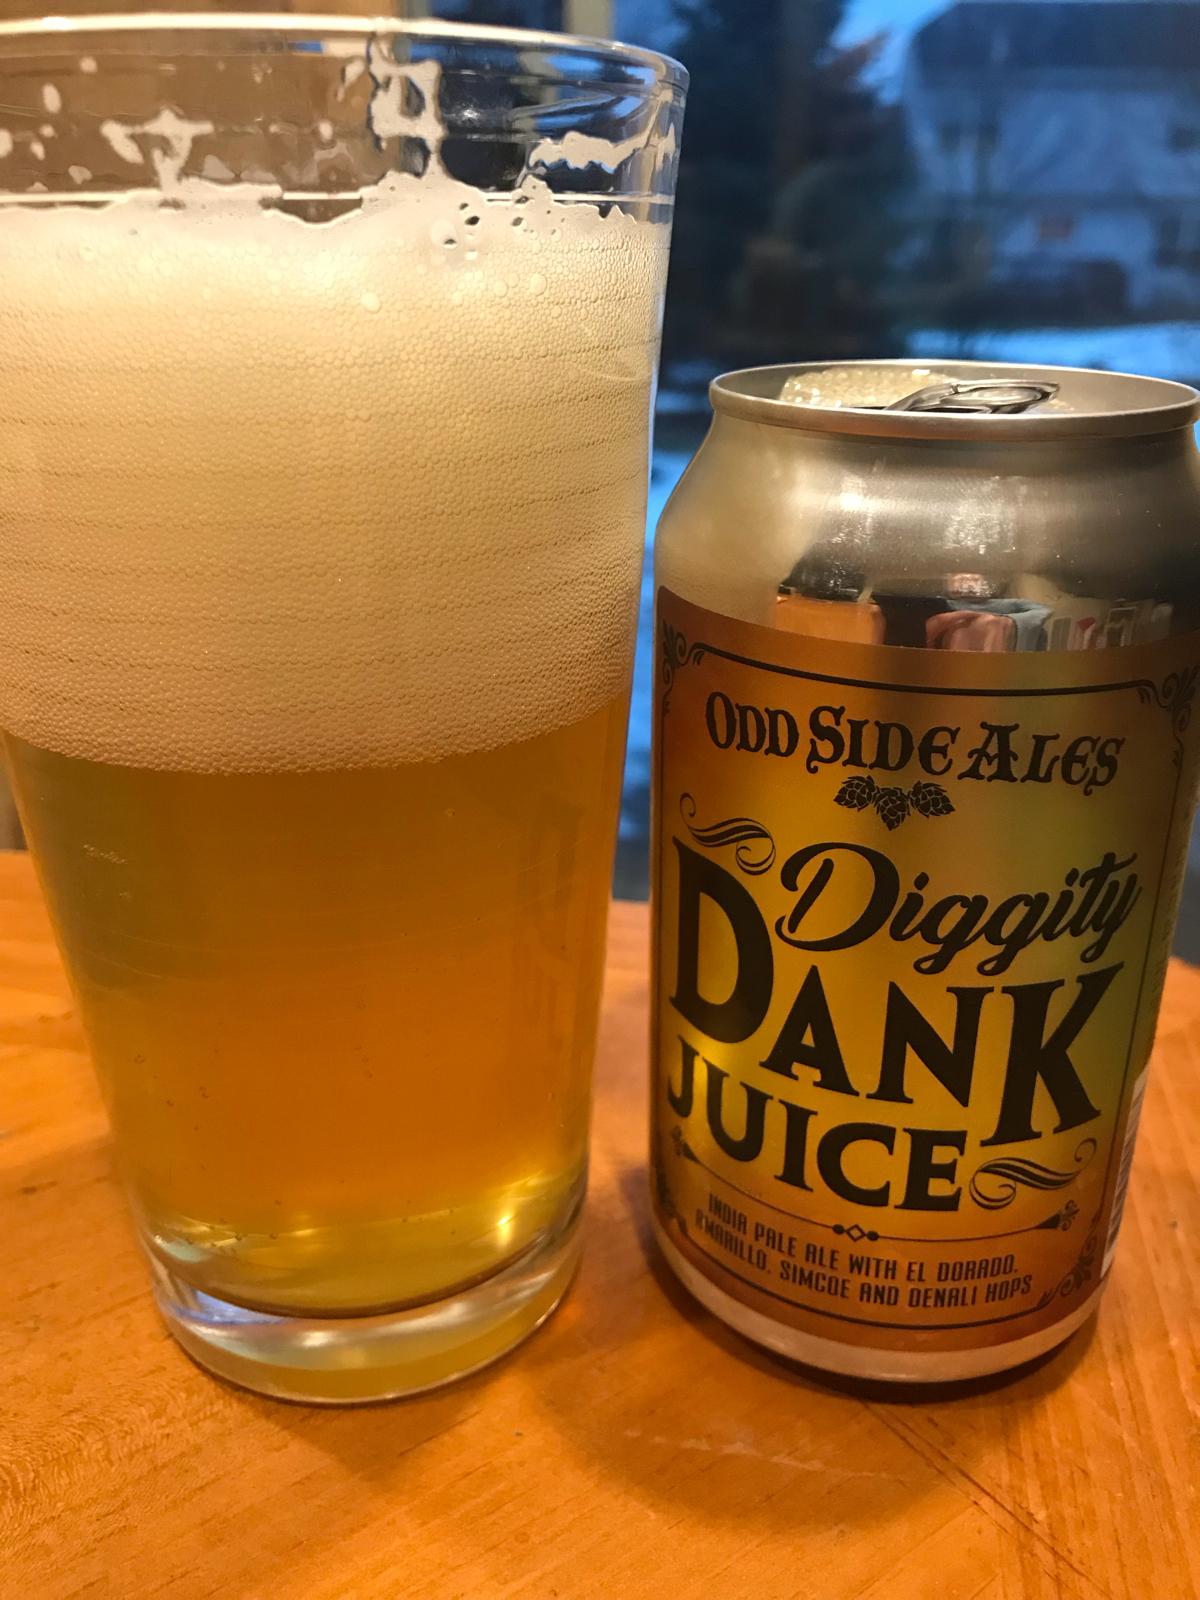 Diggity Dank Juice